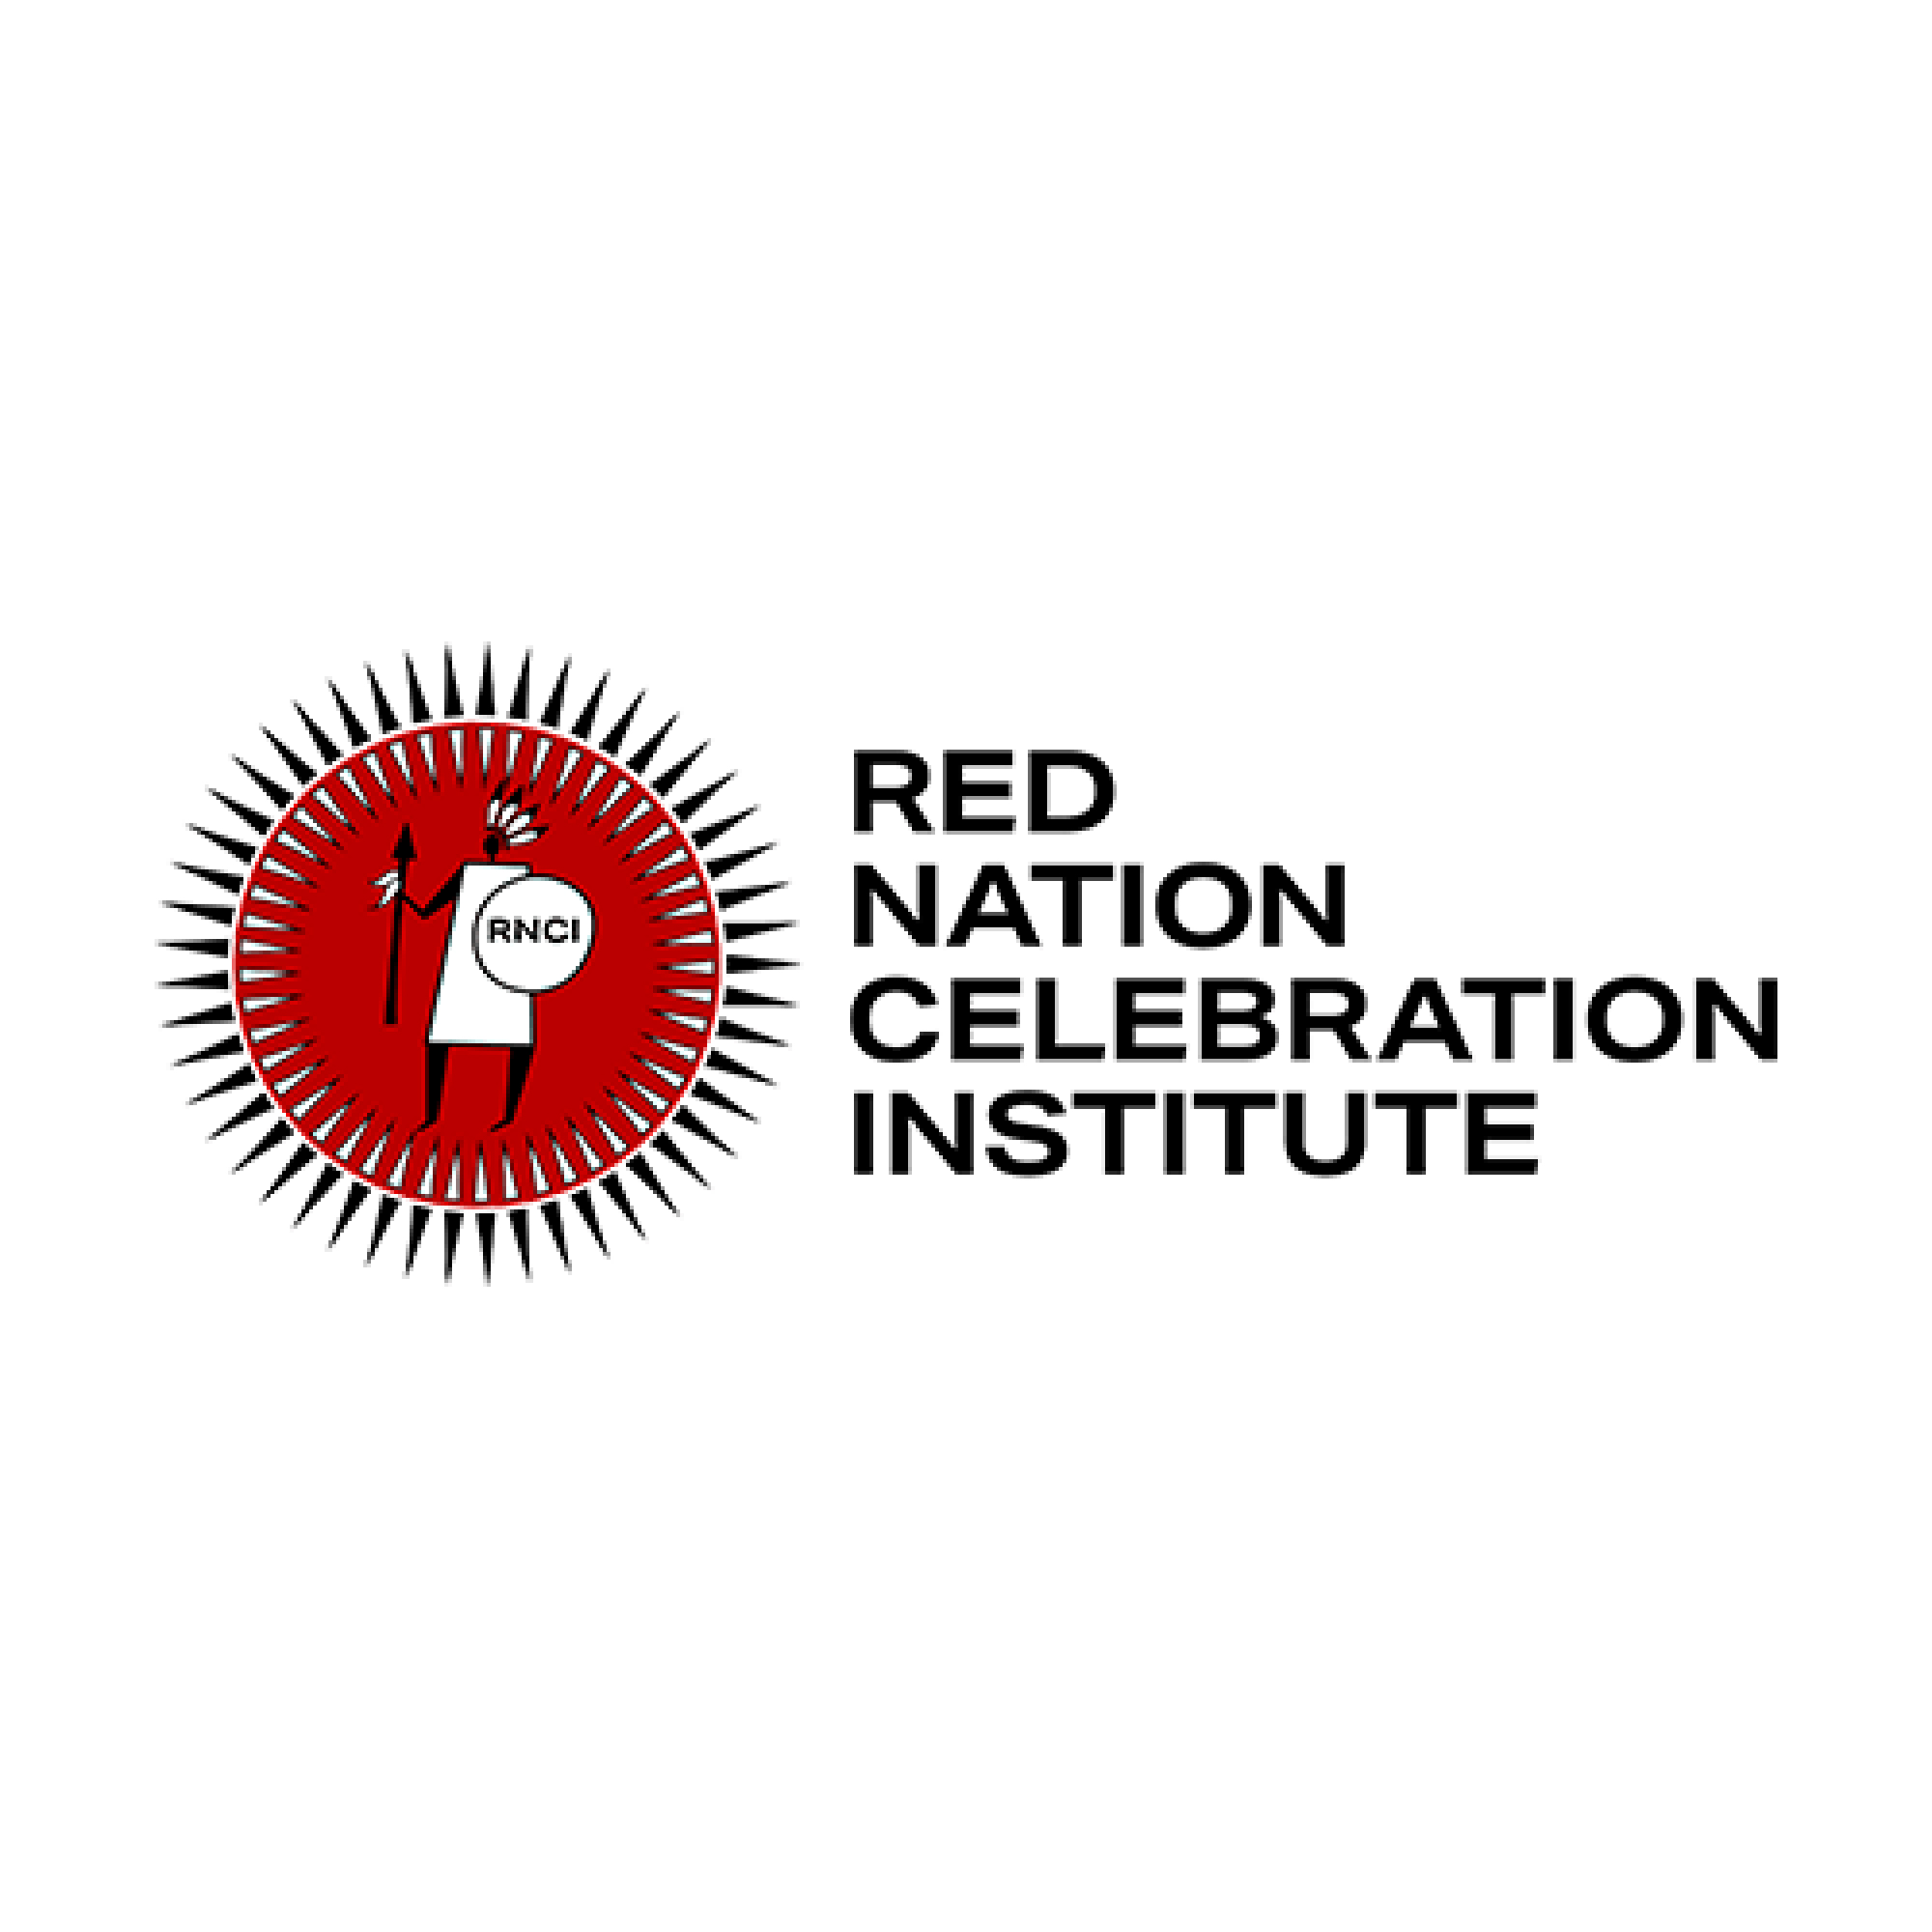 Red Nation Celebration Institute